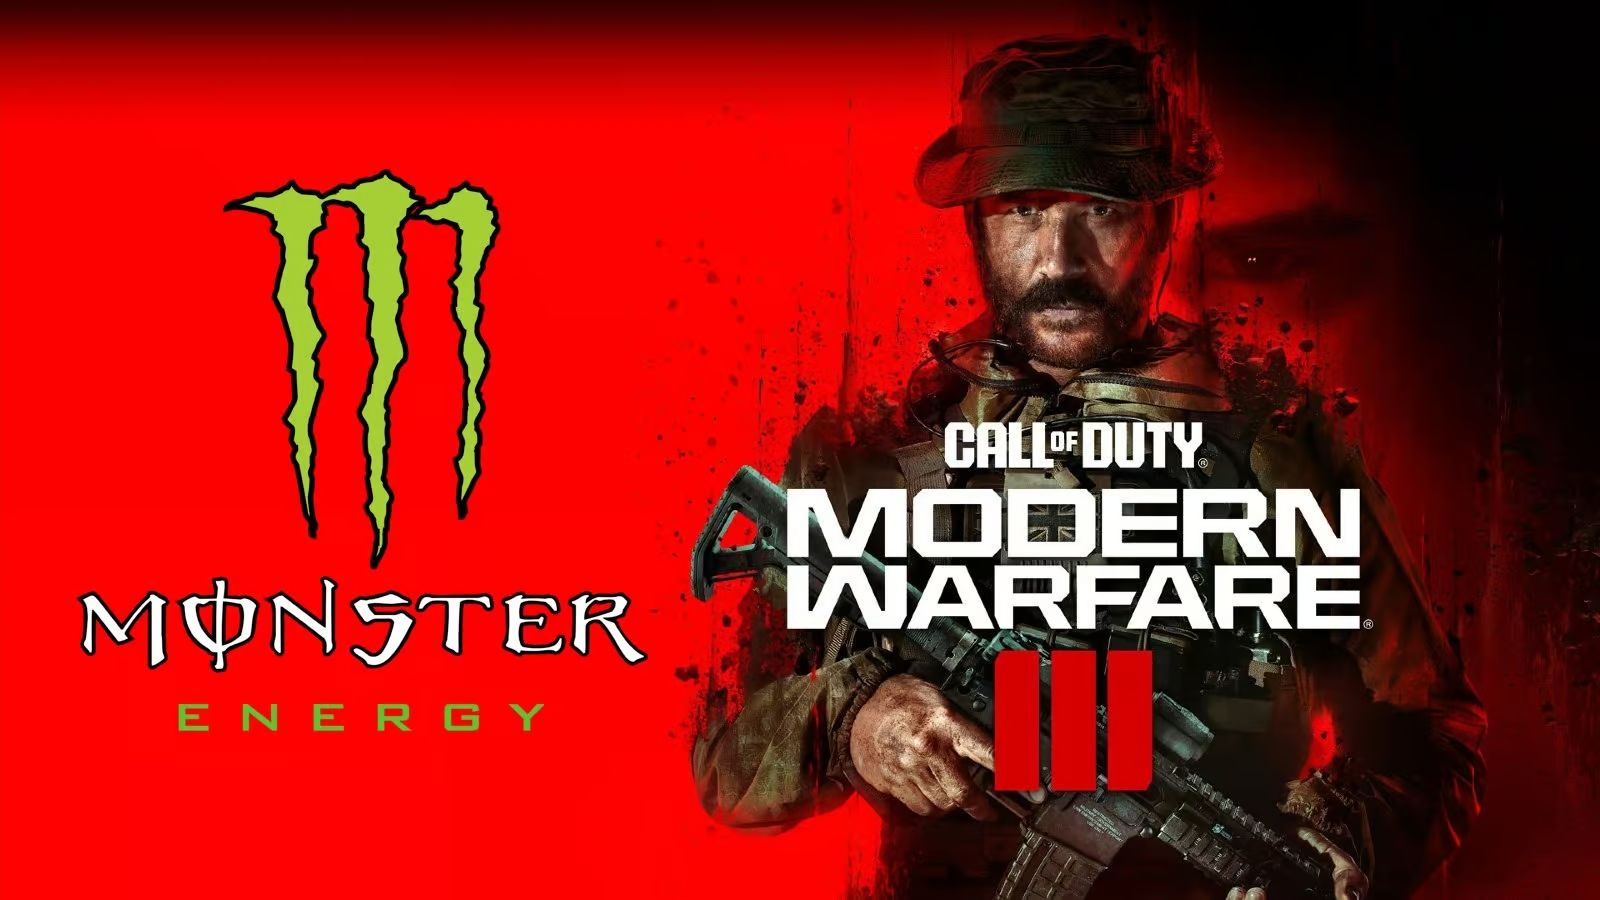 Monster Energy x Call of Duty® Team Up